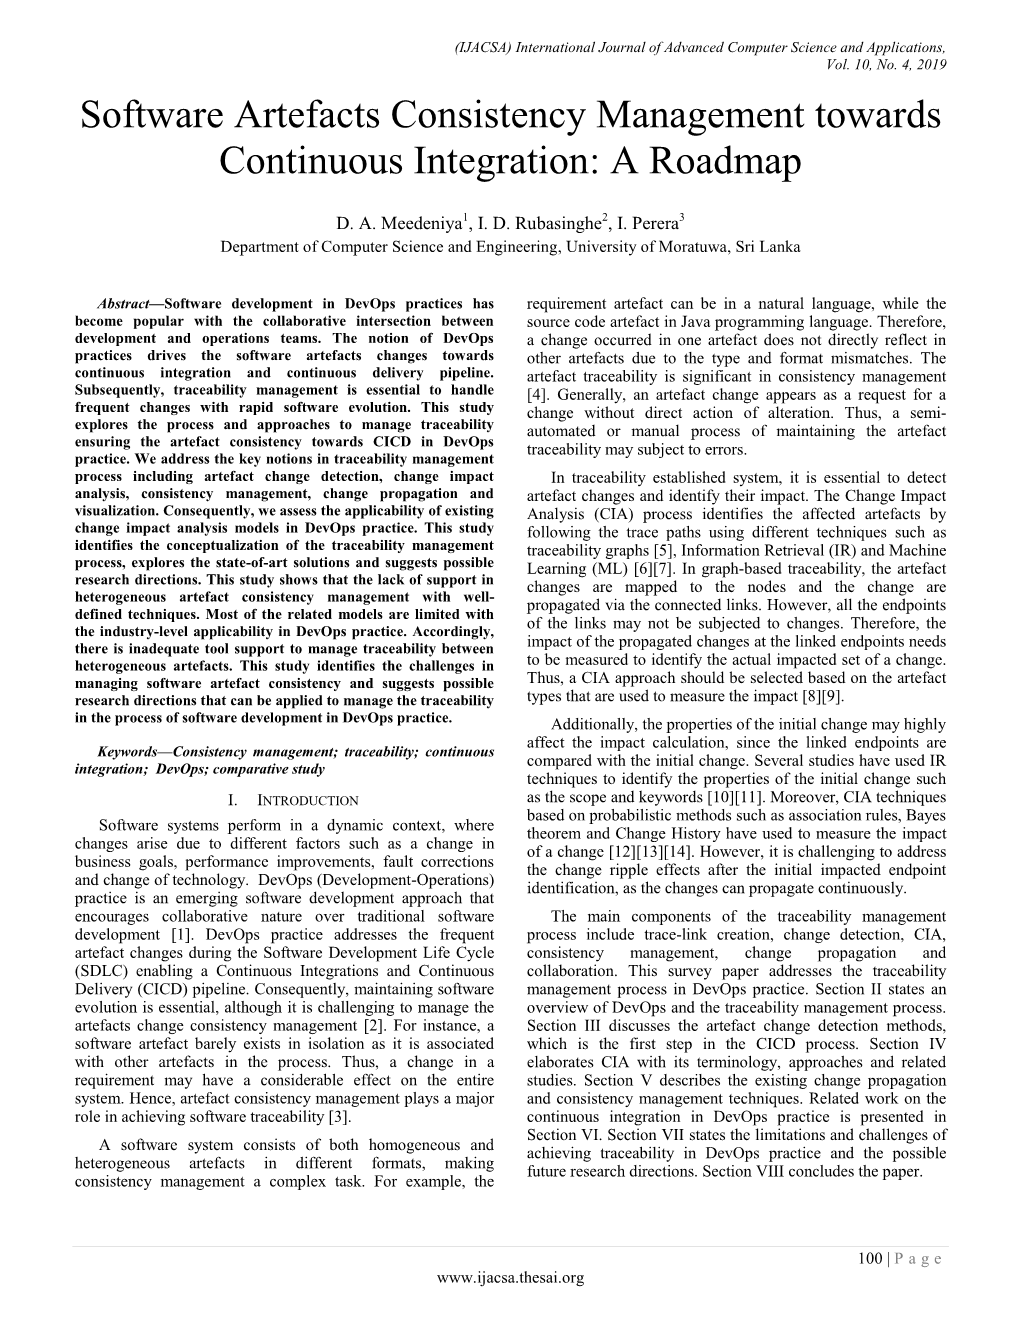 Software Artefacts Consistency Management Towards Continuous Integration: a Roadmap